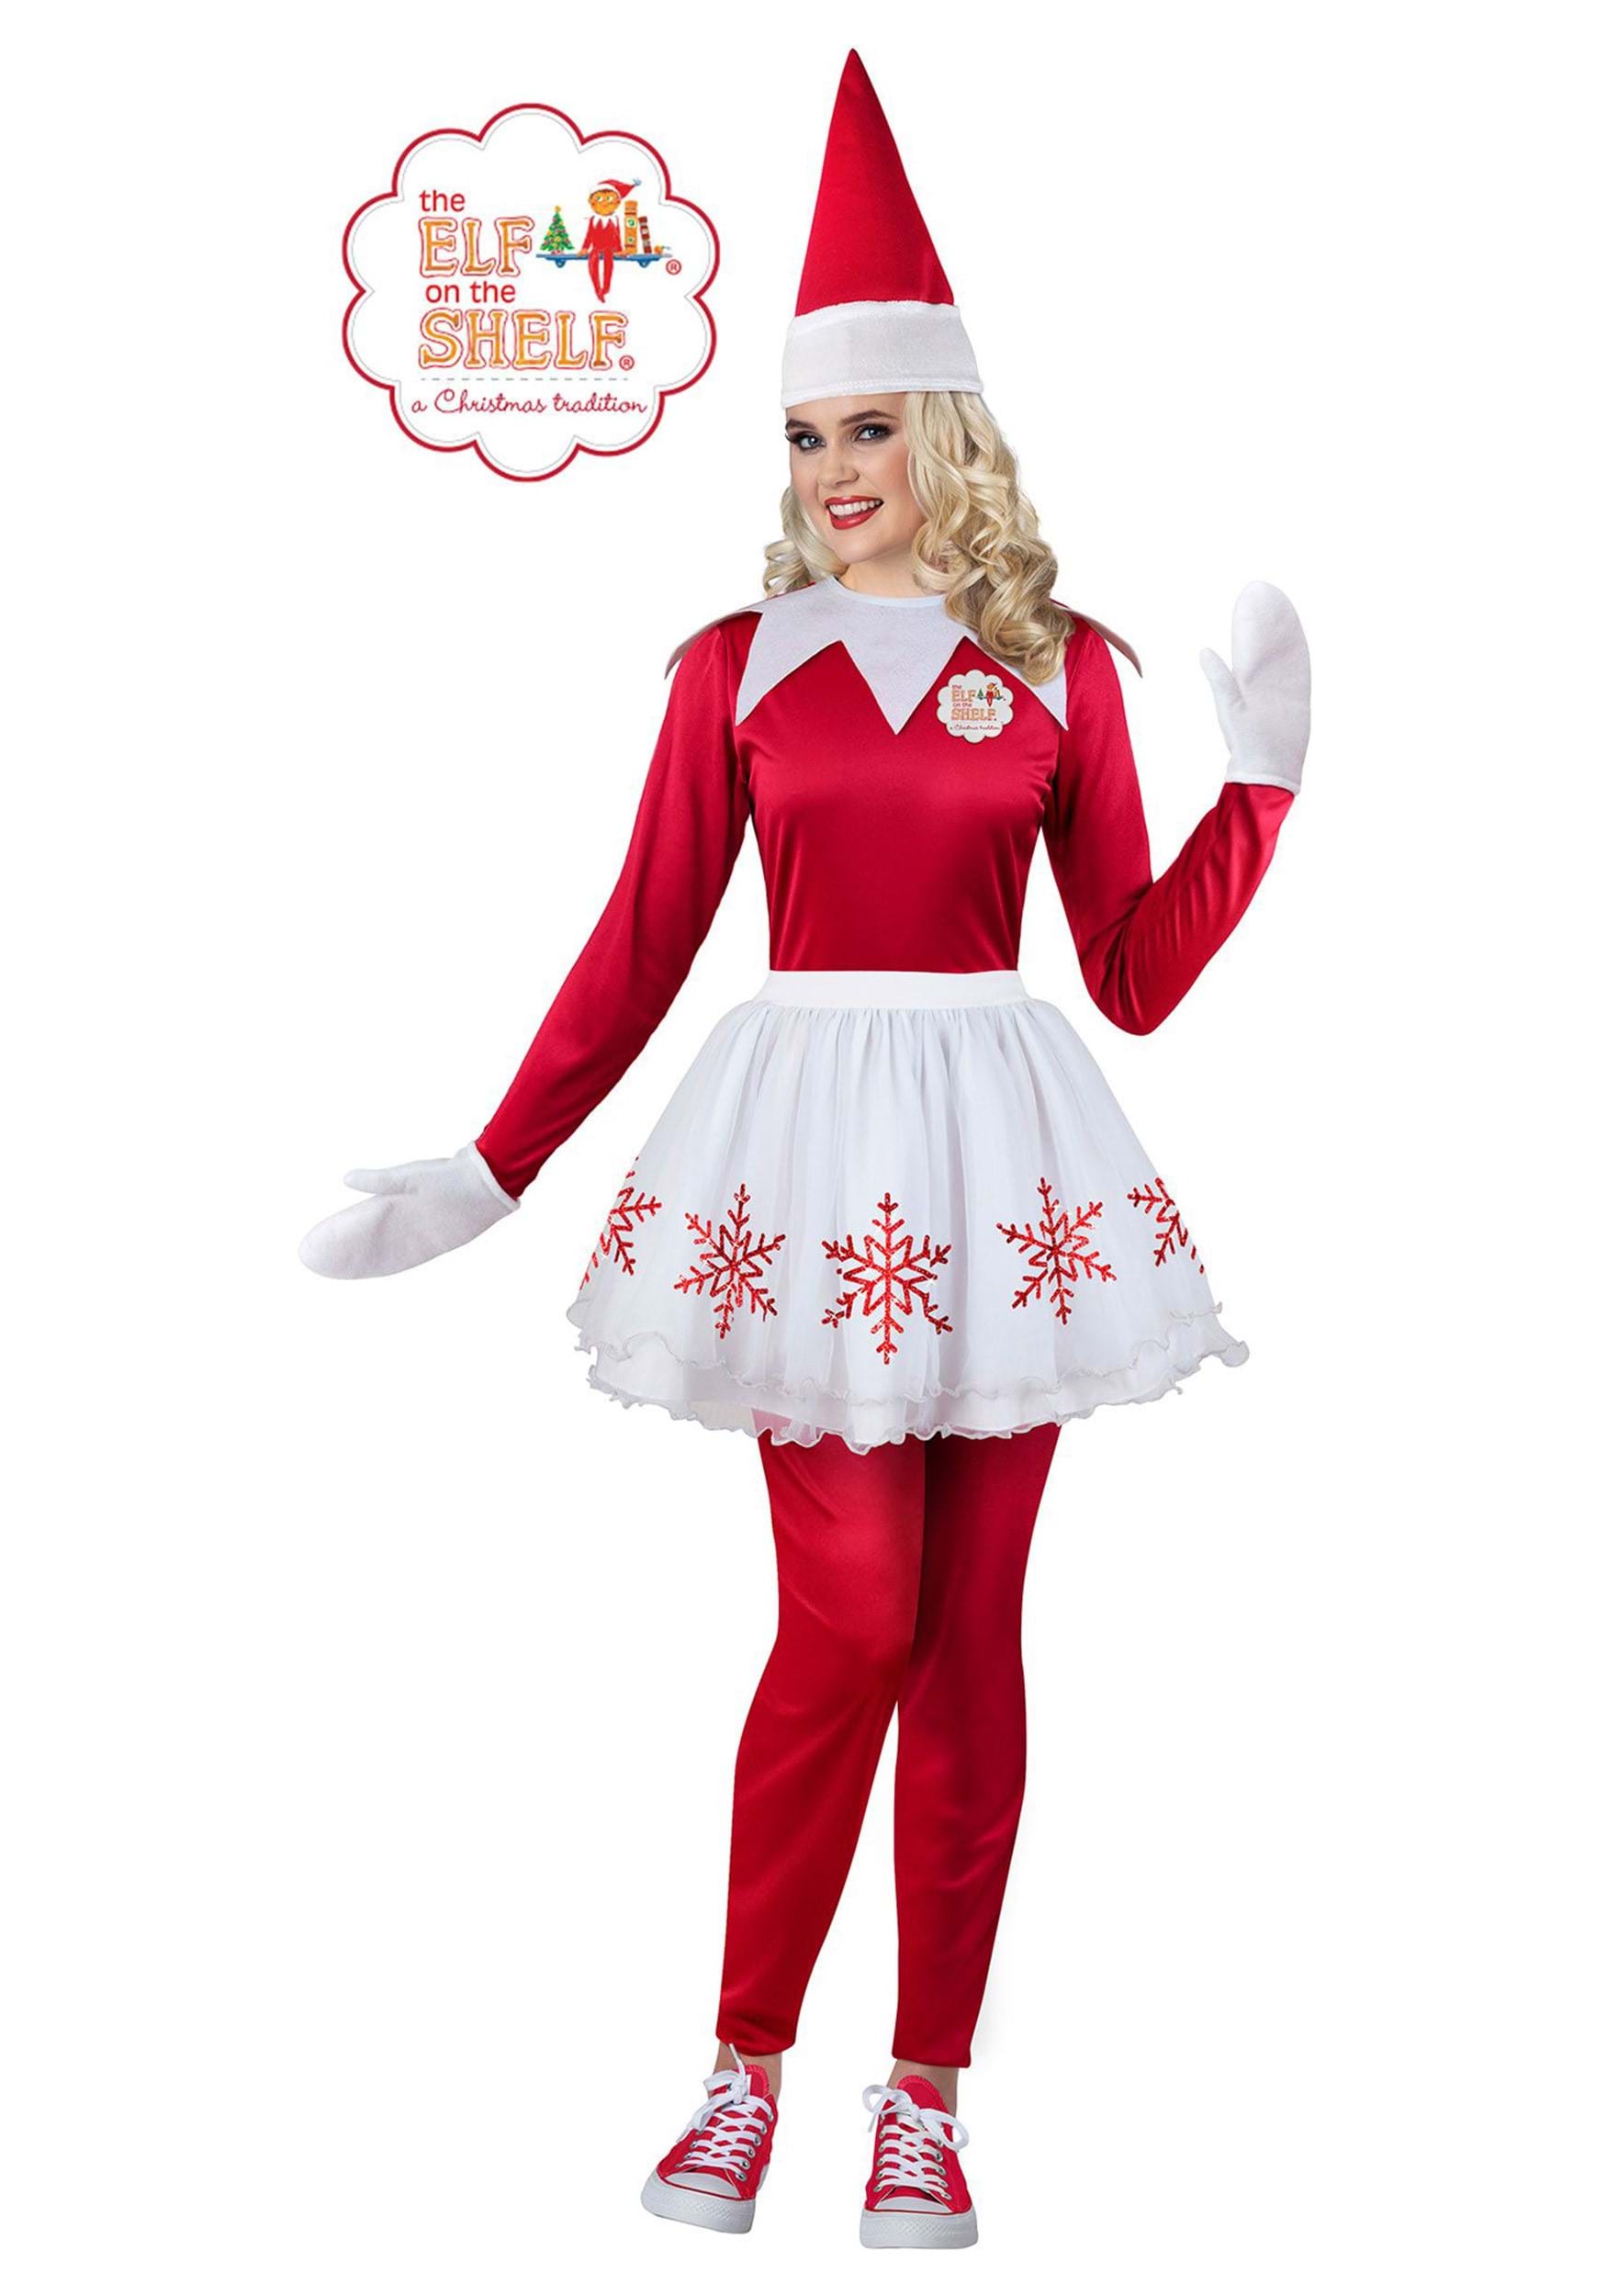 Toy Shop Shelf Elf Costume Santa's Helper Christmas Hat Men Women Standard Xmas 